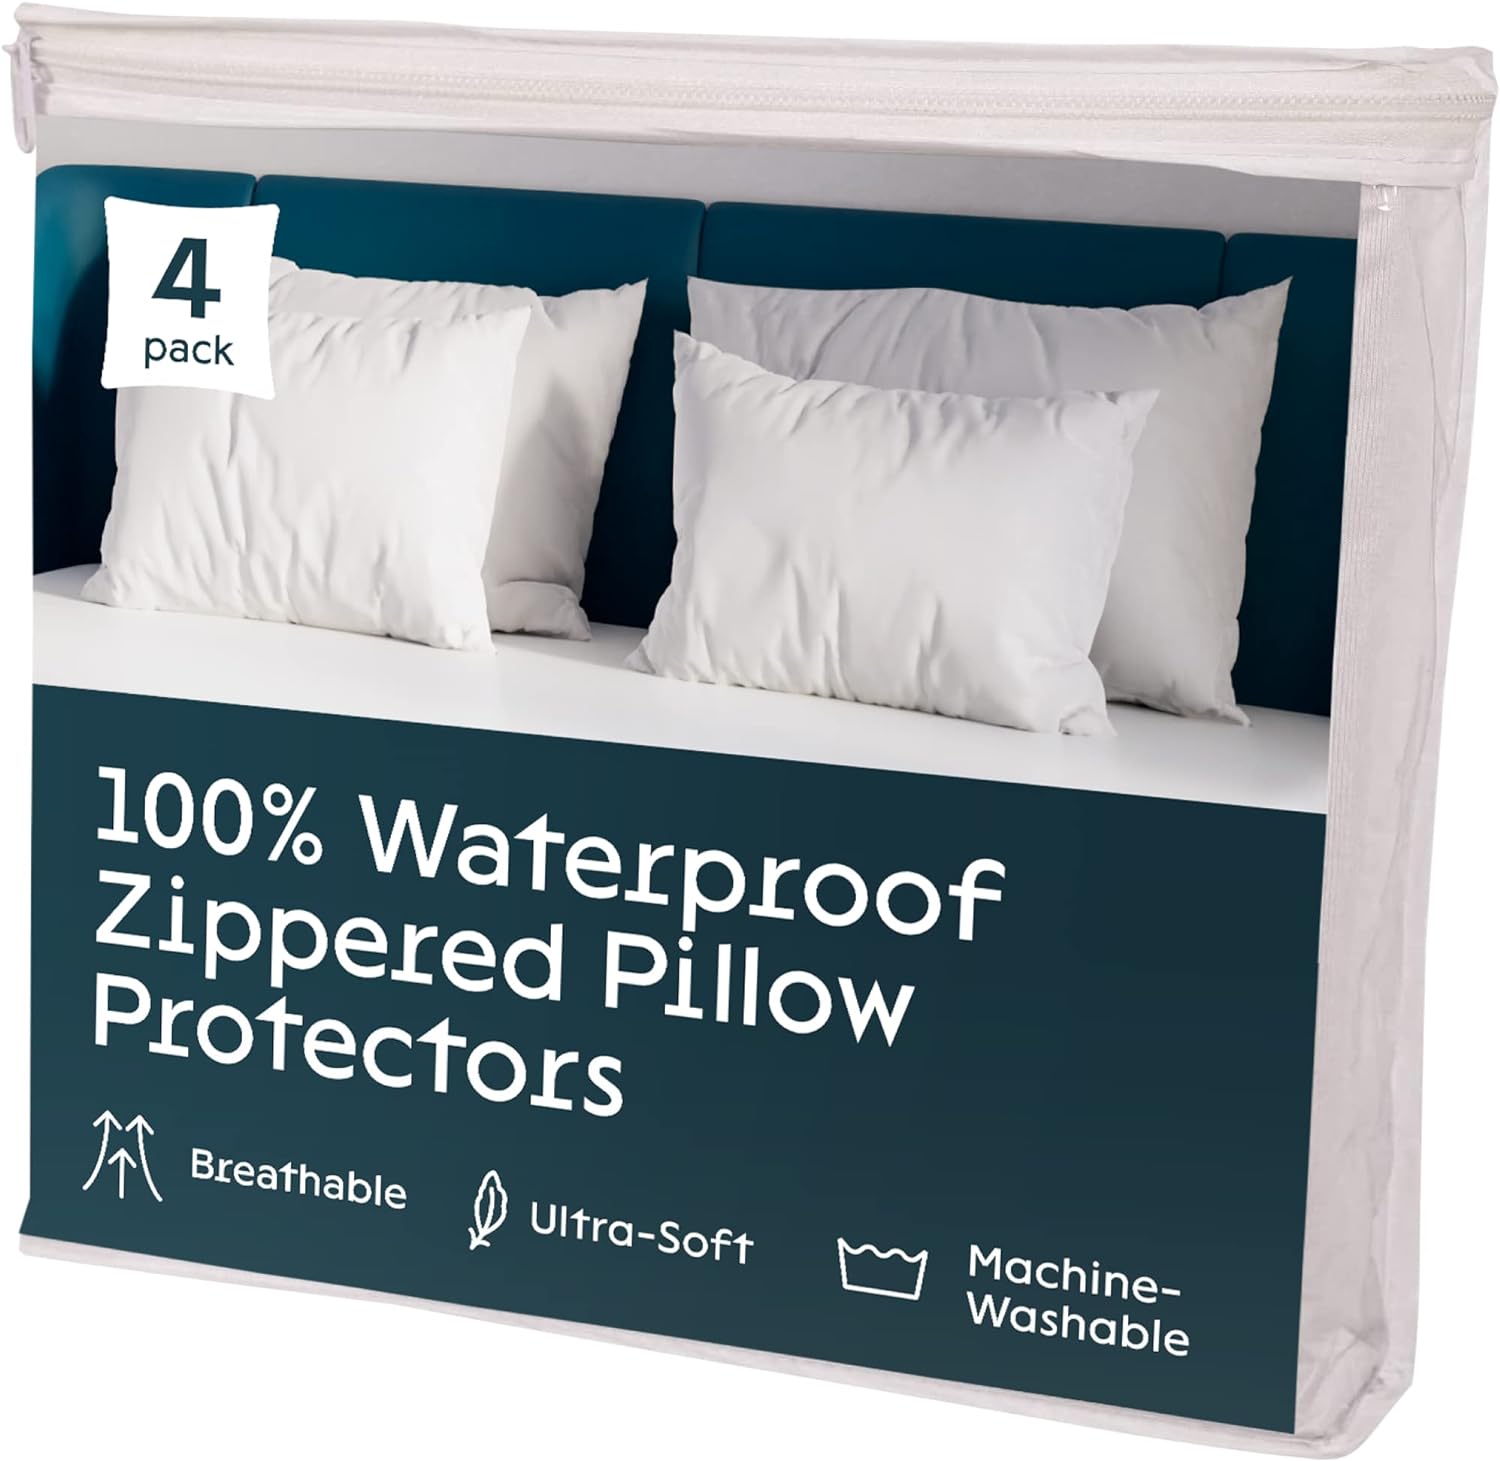 Niagara 4 Pack Waterproof Pillow Protectors Queen 20x30 Inches Smooth Zipper Premium Encasement Covers Quiet Cases Set White